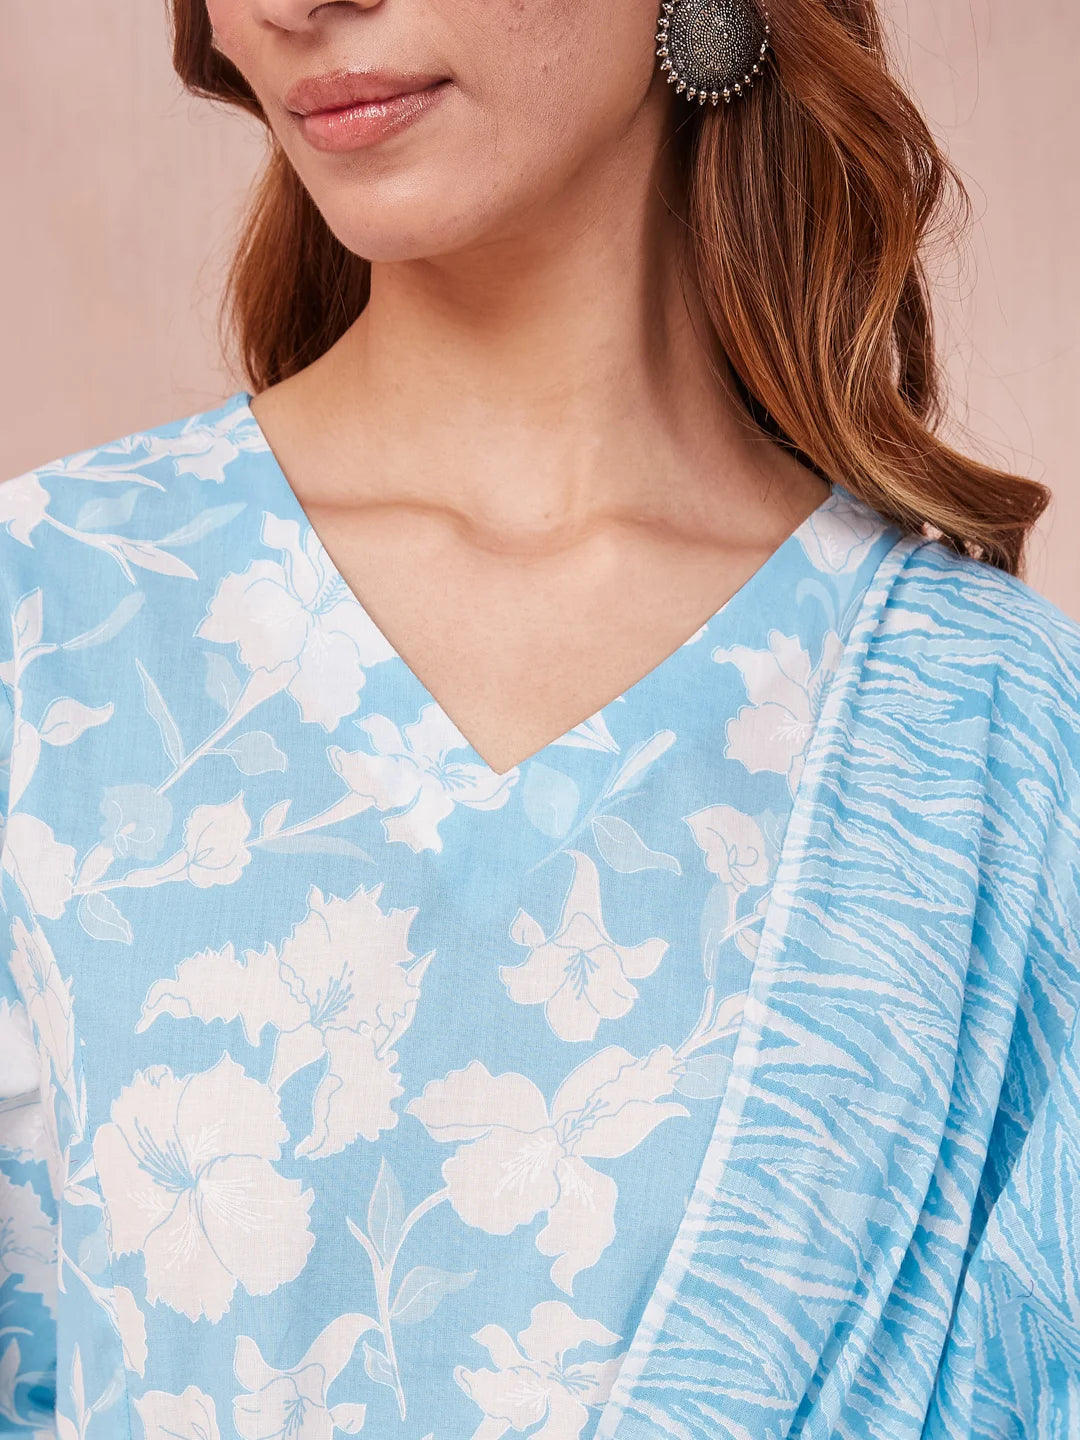 Sky Blue And White Floral Print Lese Sleeves V-Neck Straight Kurta Trouser Set-Yufta Store-6862SKDSBS